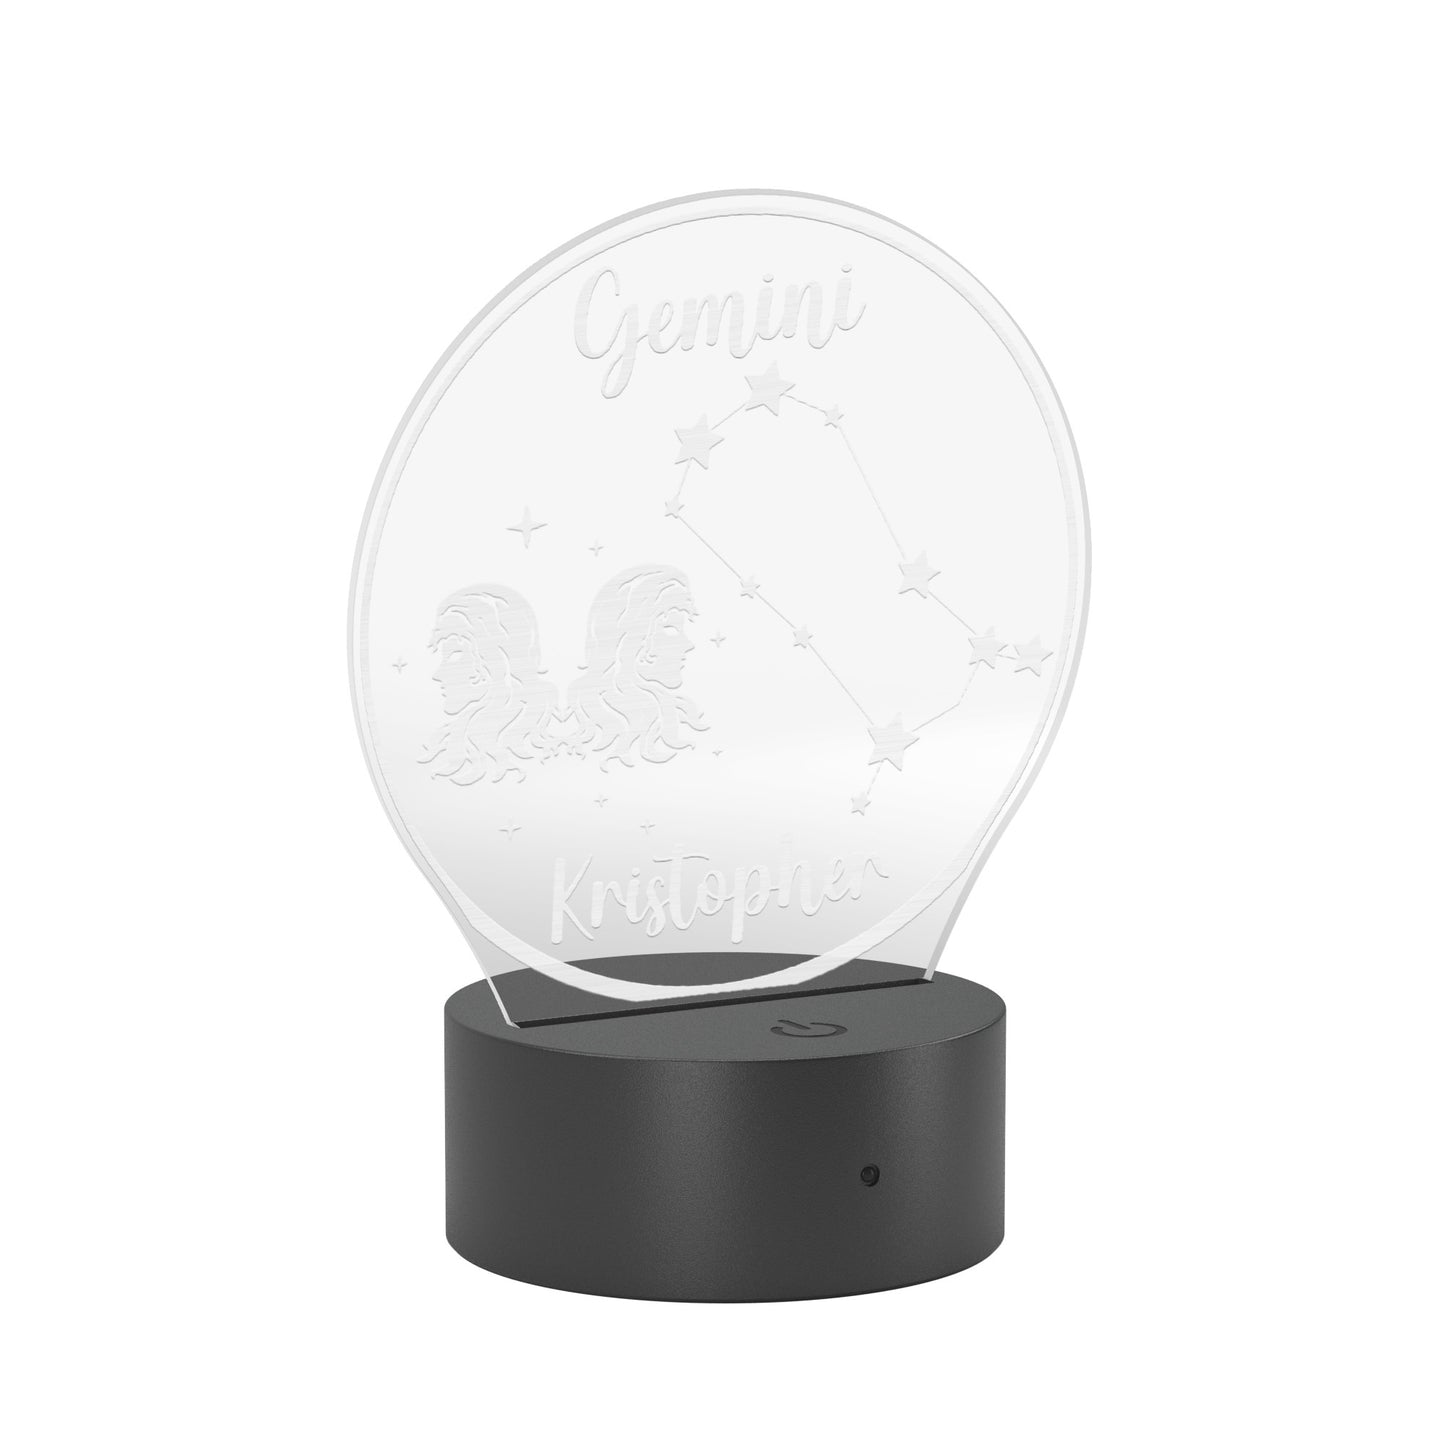 Personalized Gemini LED Light Gemini Gift Ideas